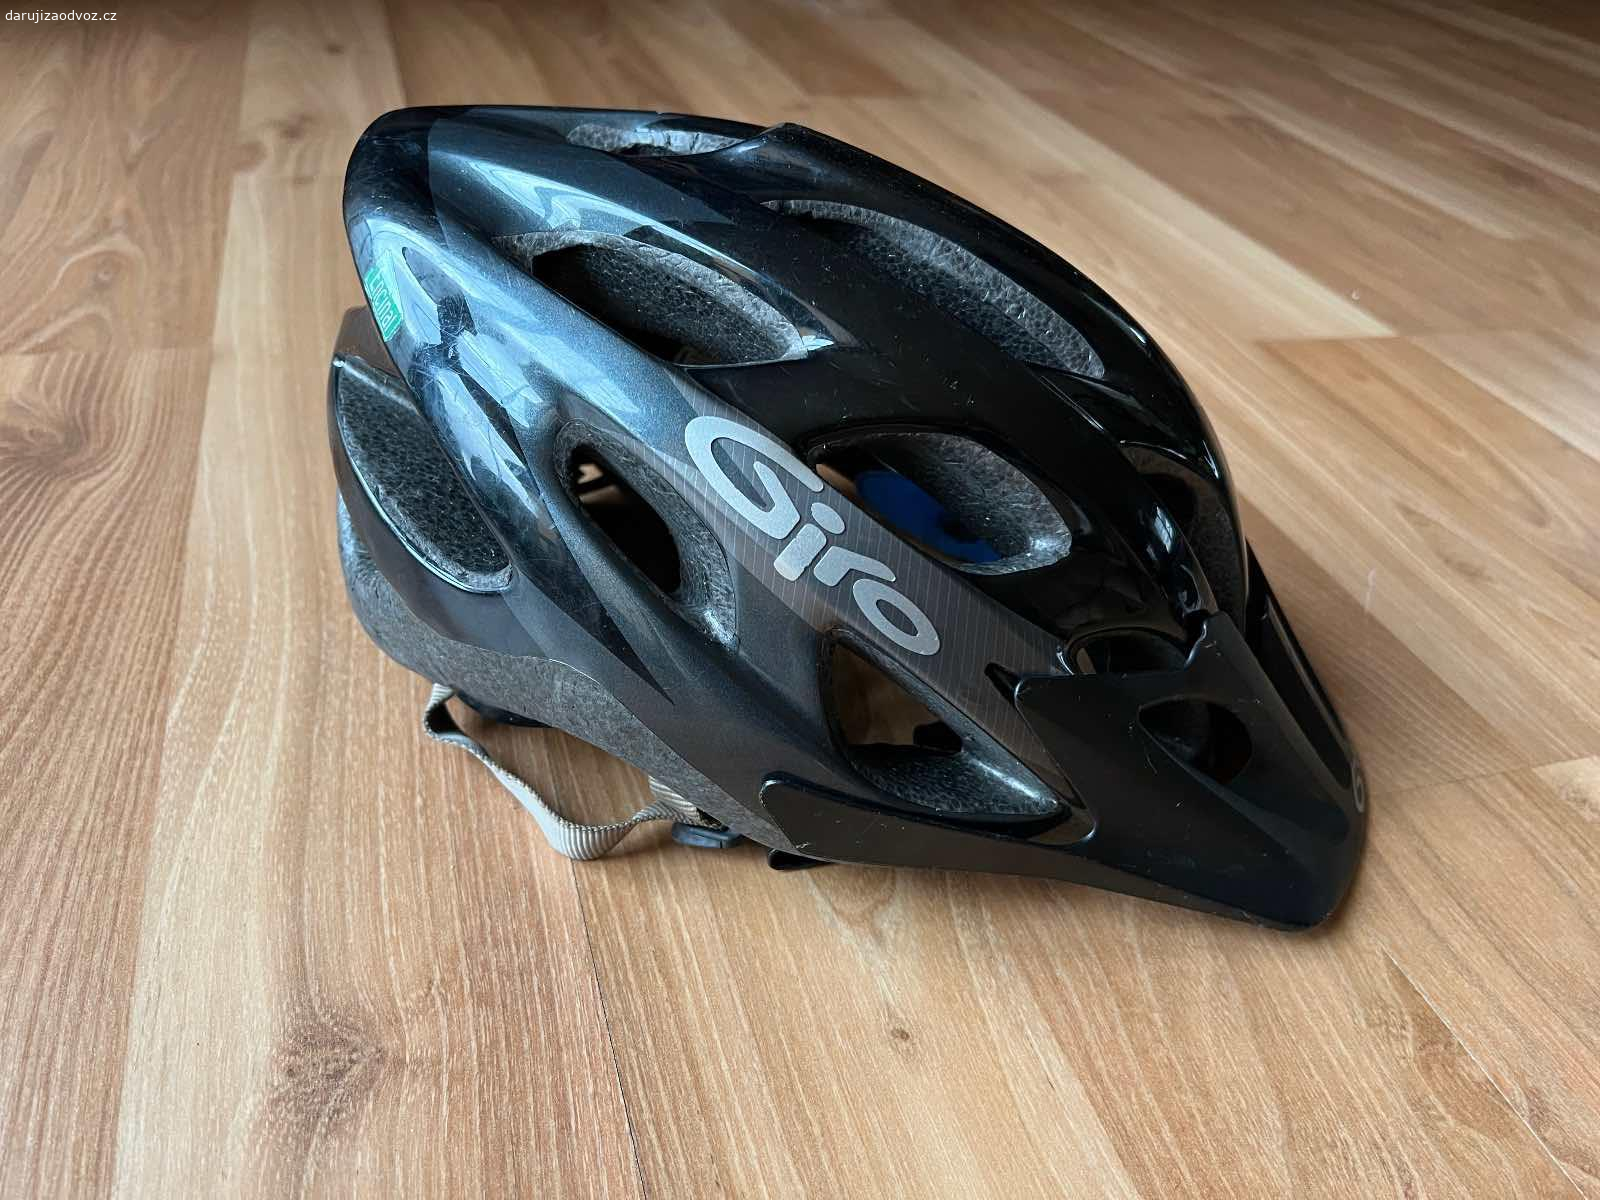 Daruji cyklo helmu. Starší cyklistická helma zn. Giro